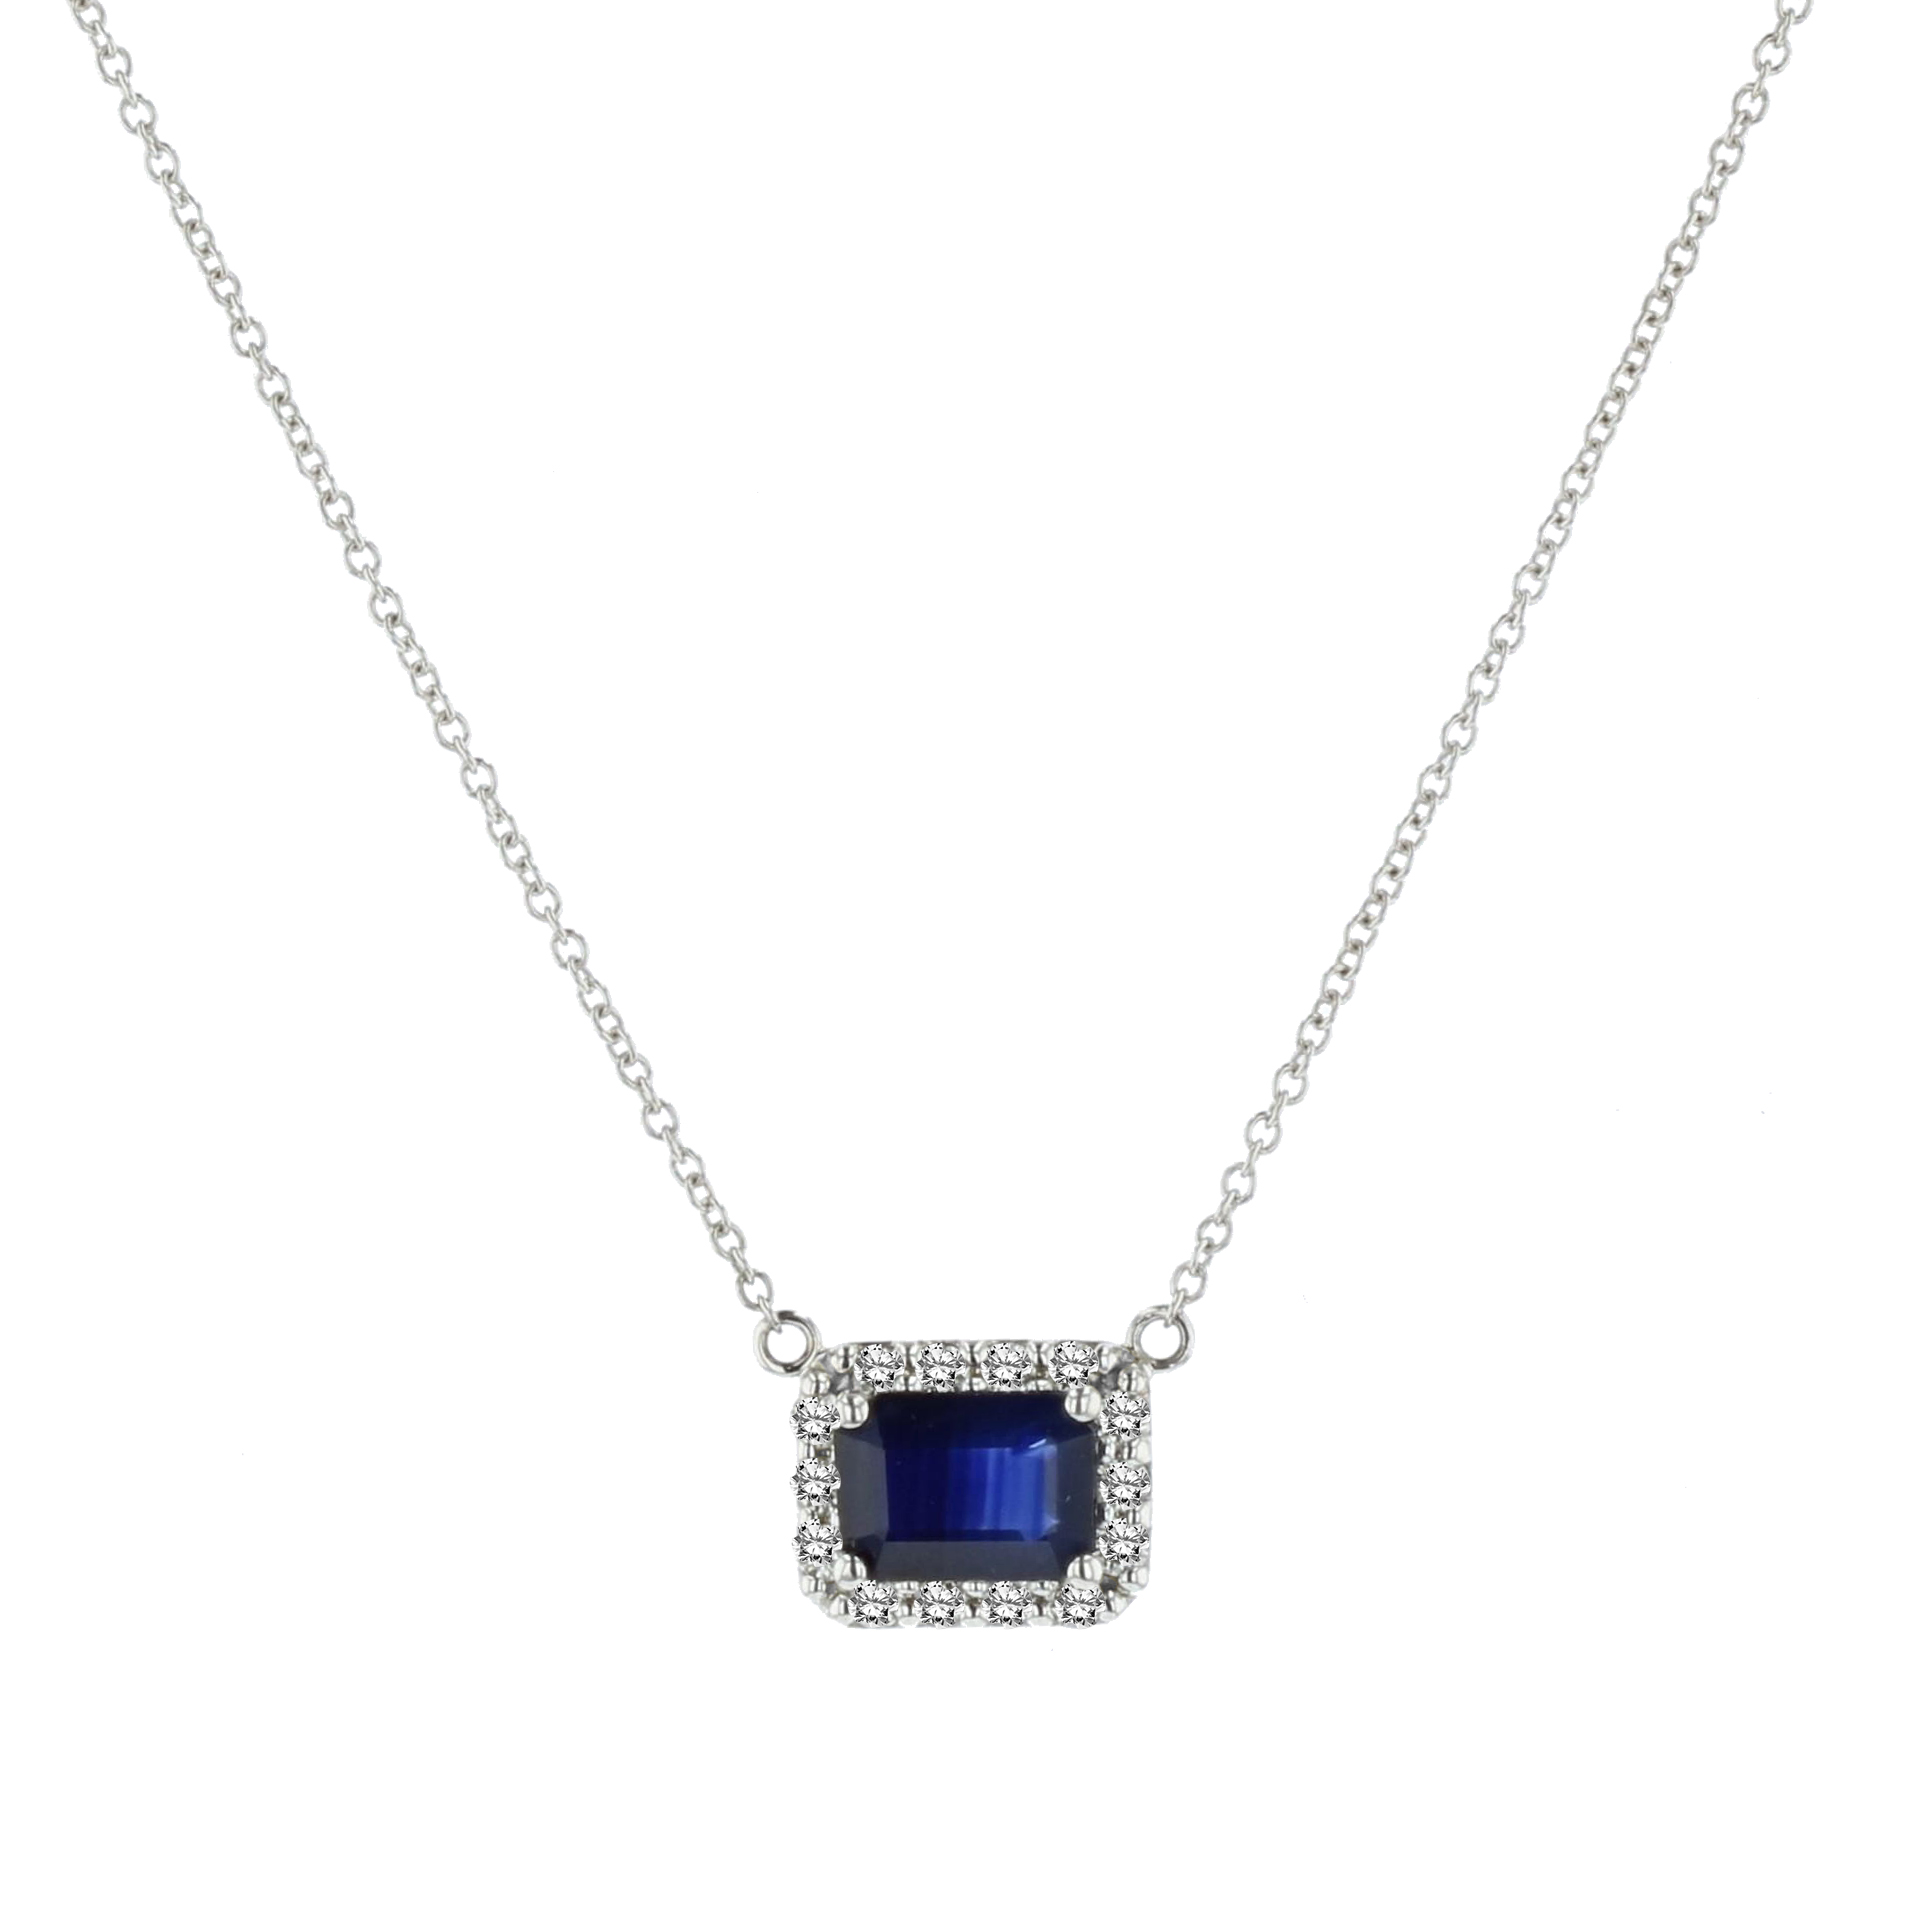 View 0.25ctw Diamond and Emerald Cut Sapphire Pendant in 14k White Gold